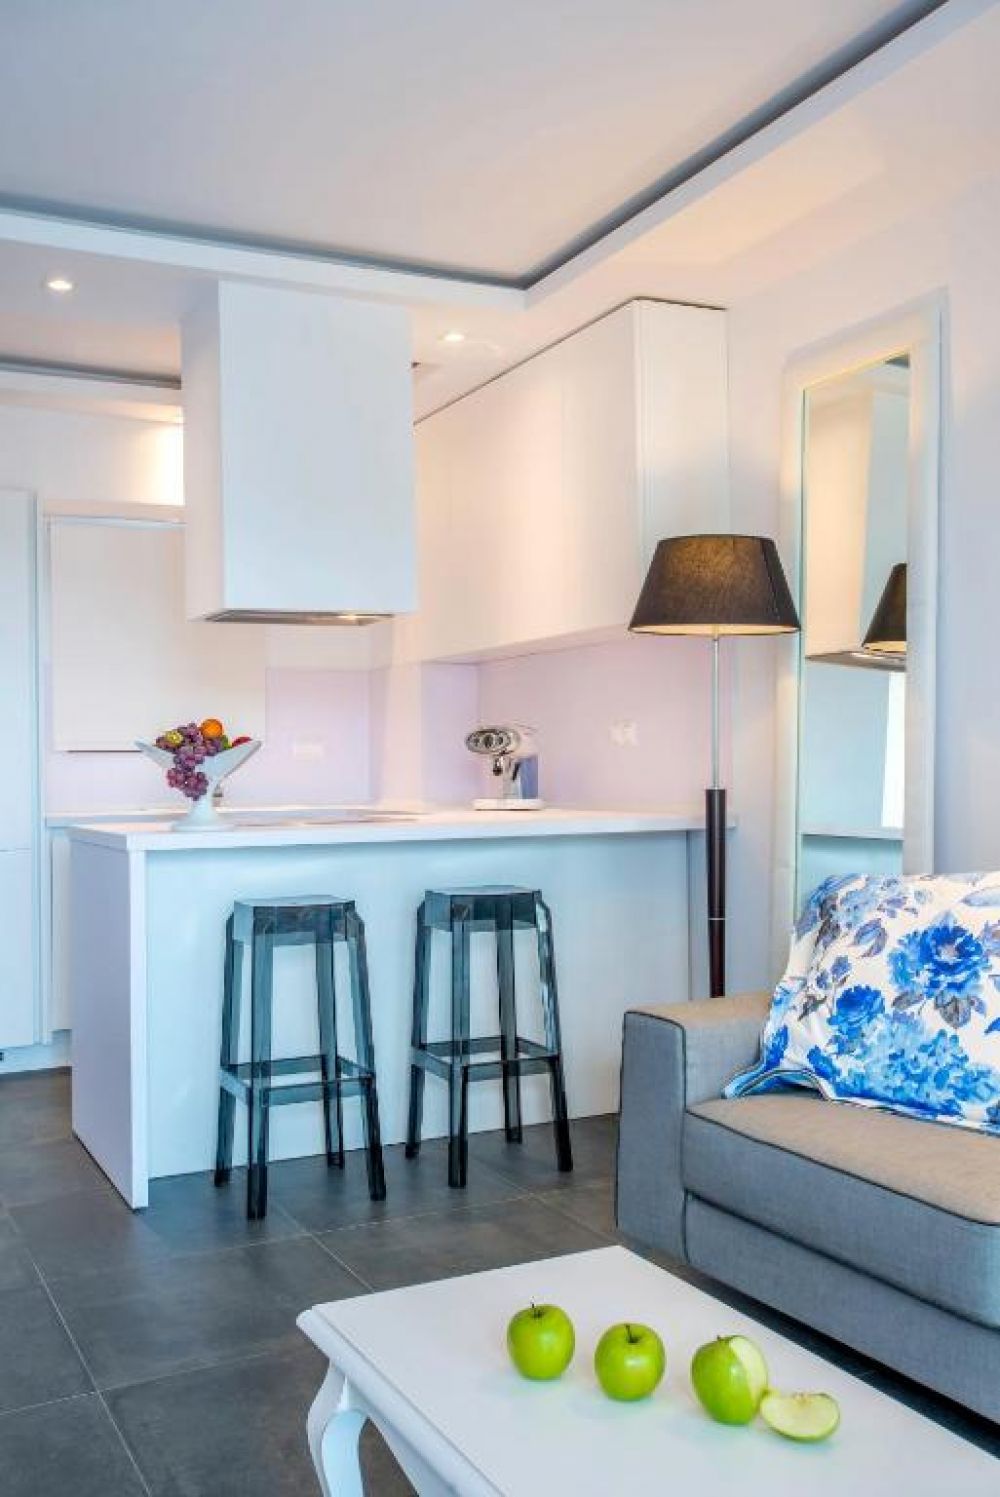 Suite Two Bedrooms Private Pool, Avaton Luxury Hotel & Villas – Relais & Chateaux 5*